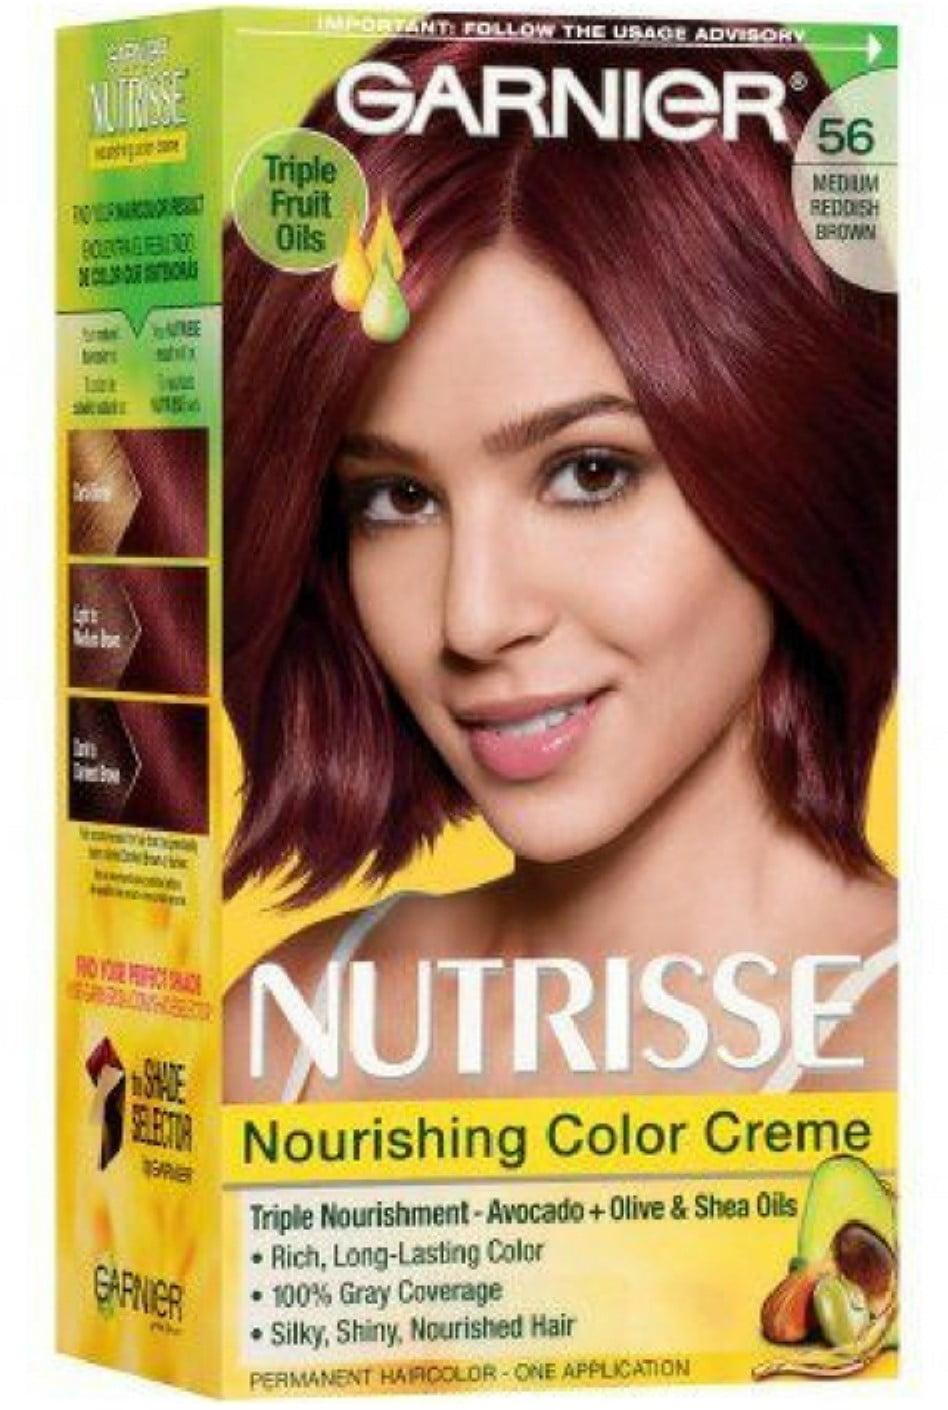 Garnier Nutrisse Nourishing Color Creme, 56 Medium Reddish Brown 1 ea -  